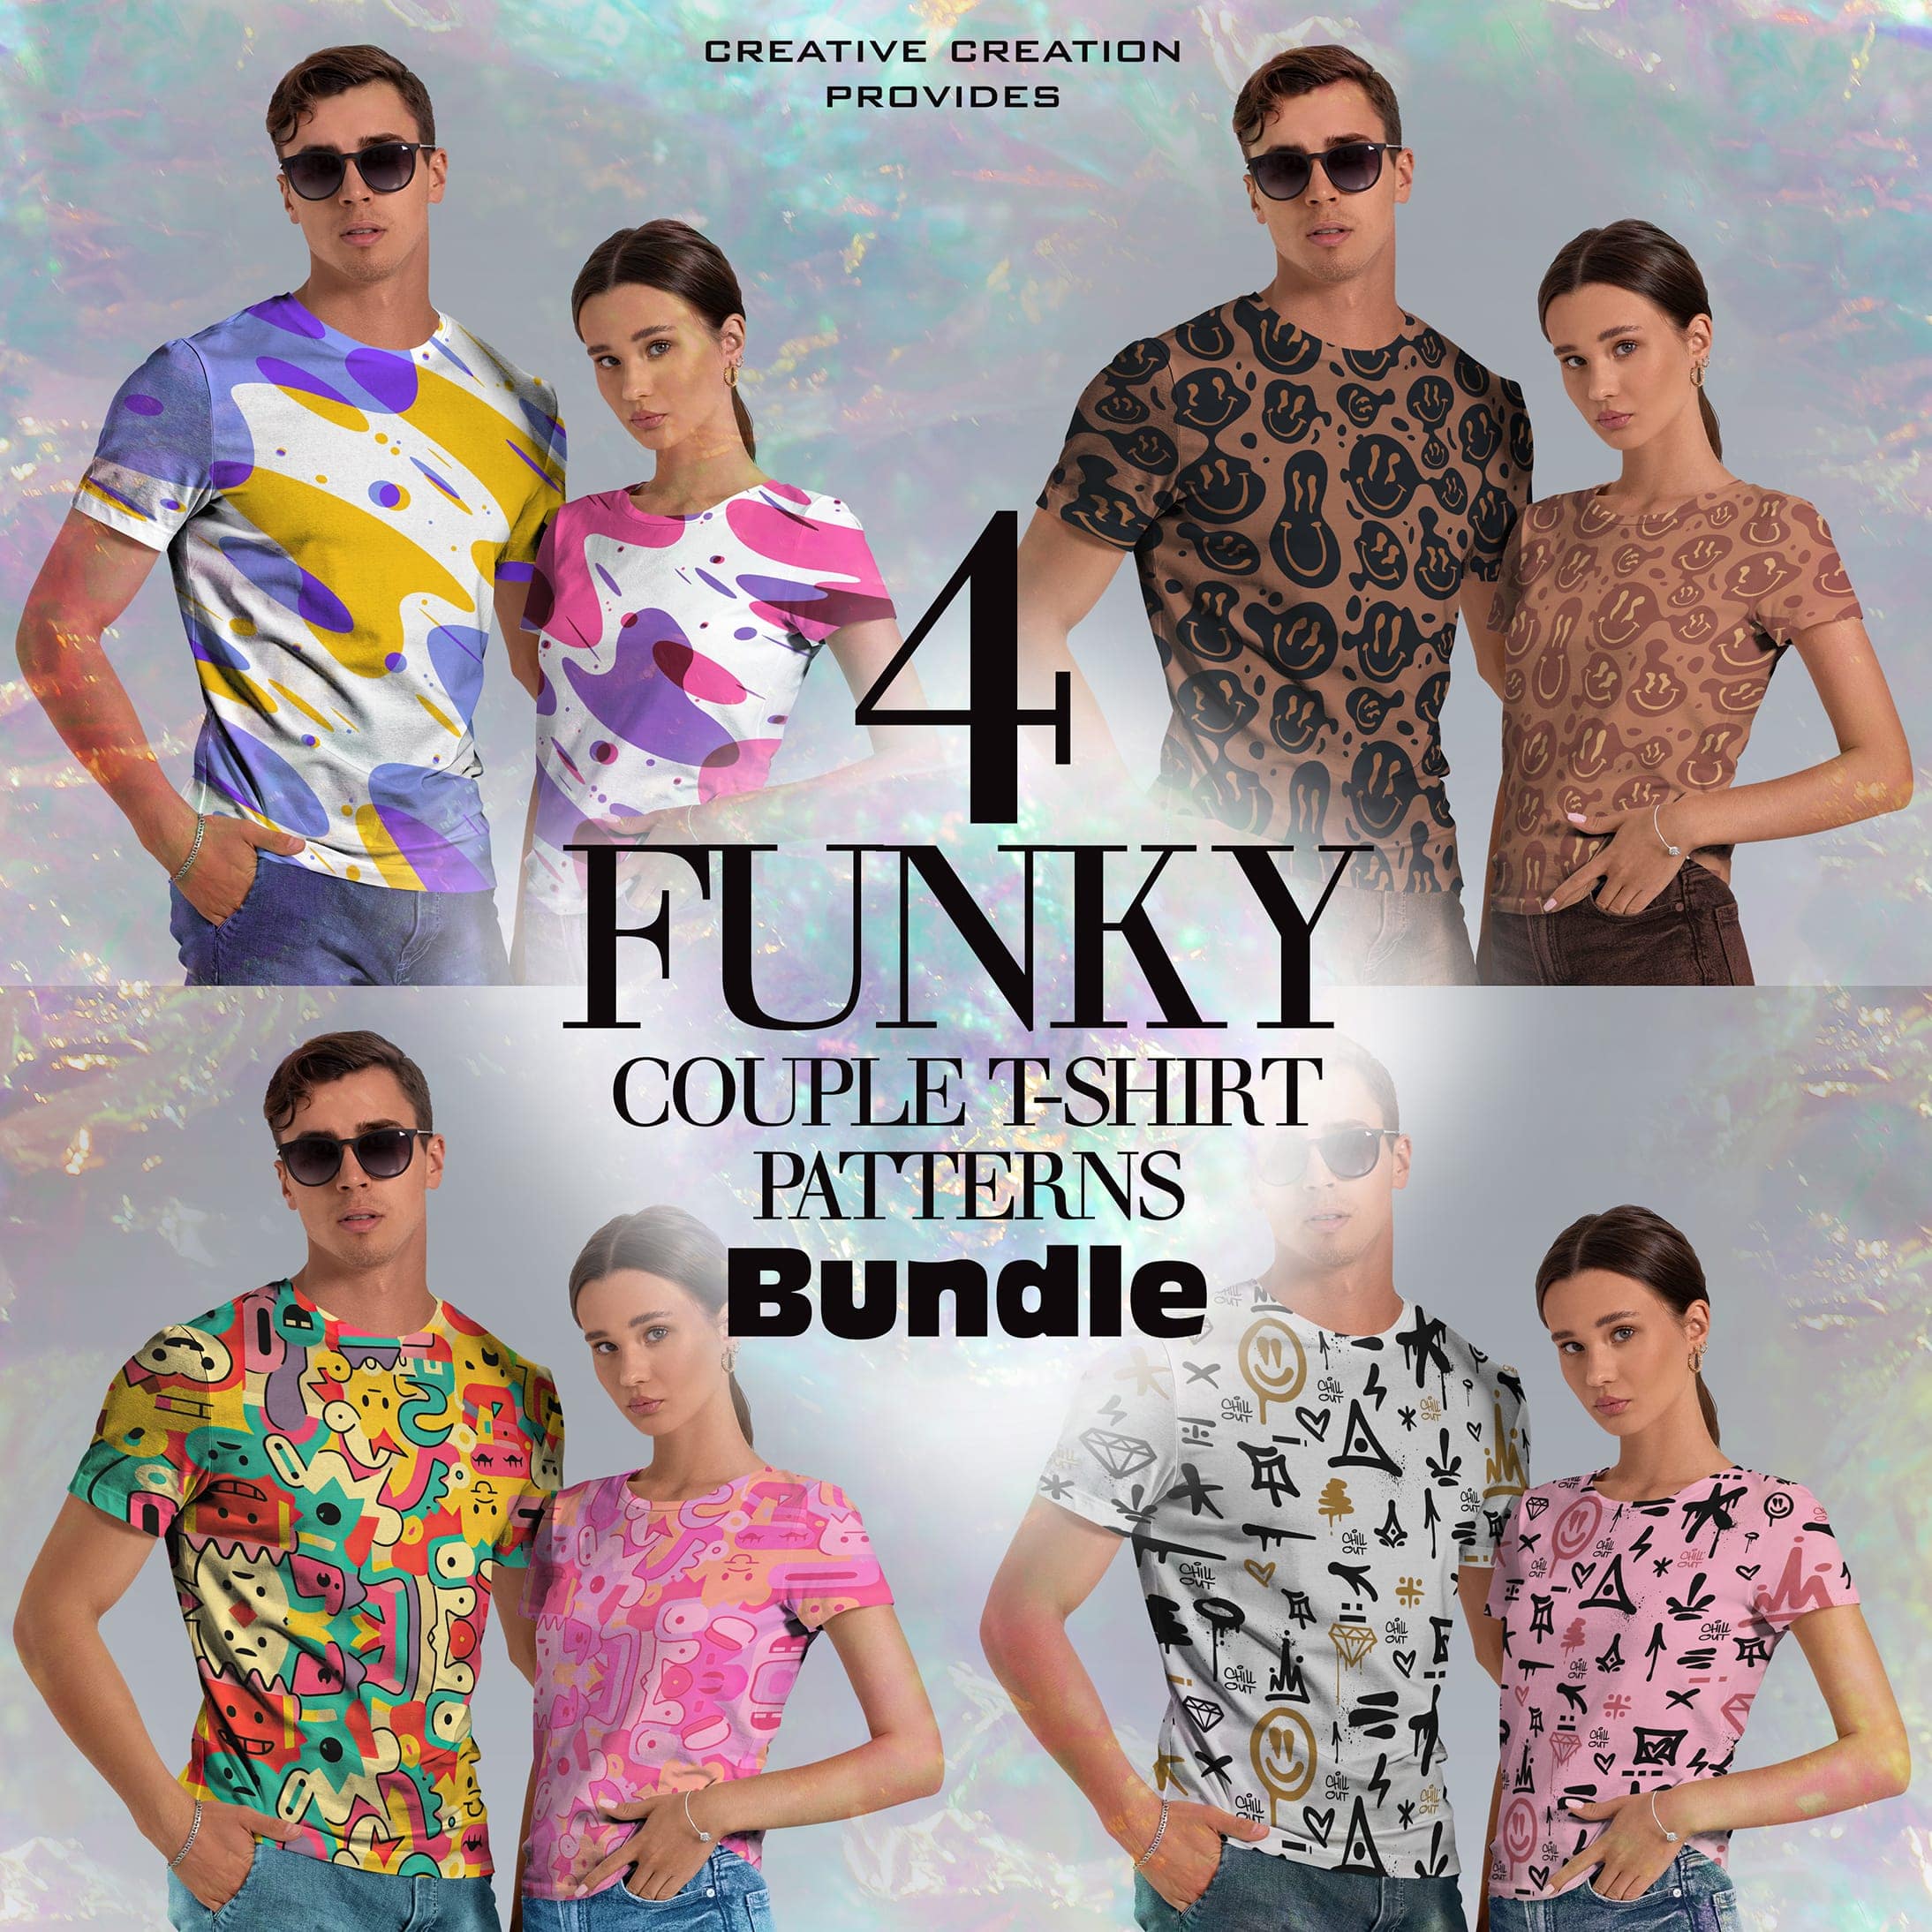 funky tshirt pattern image 1 956